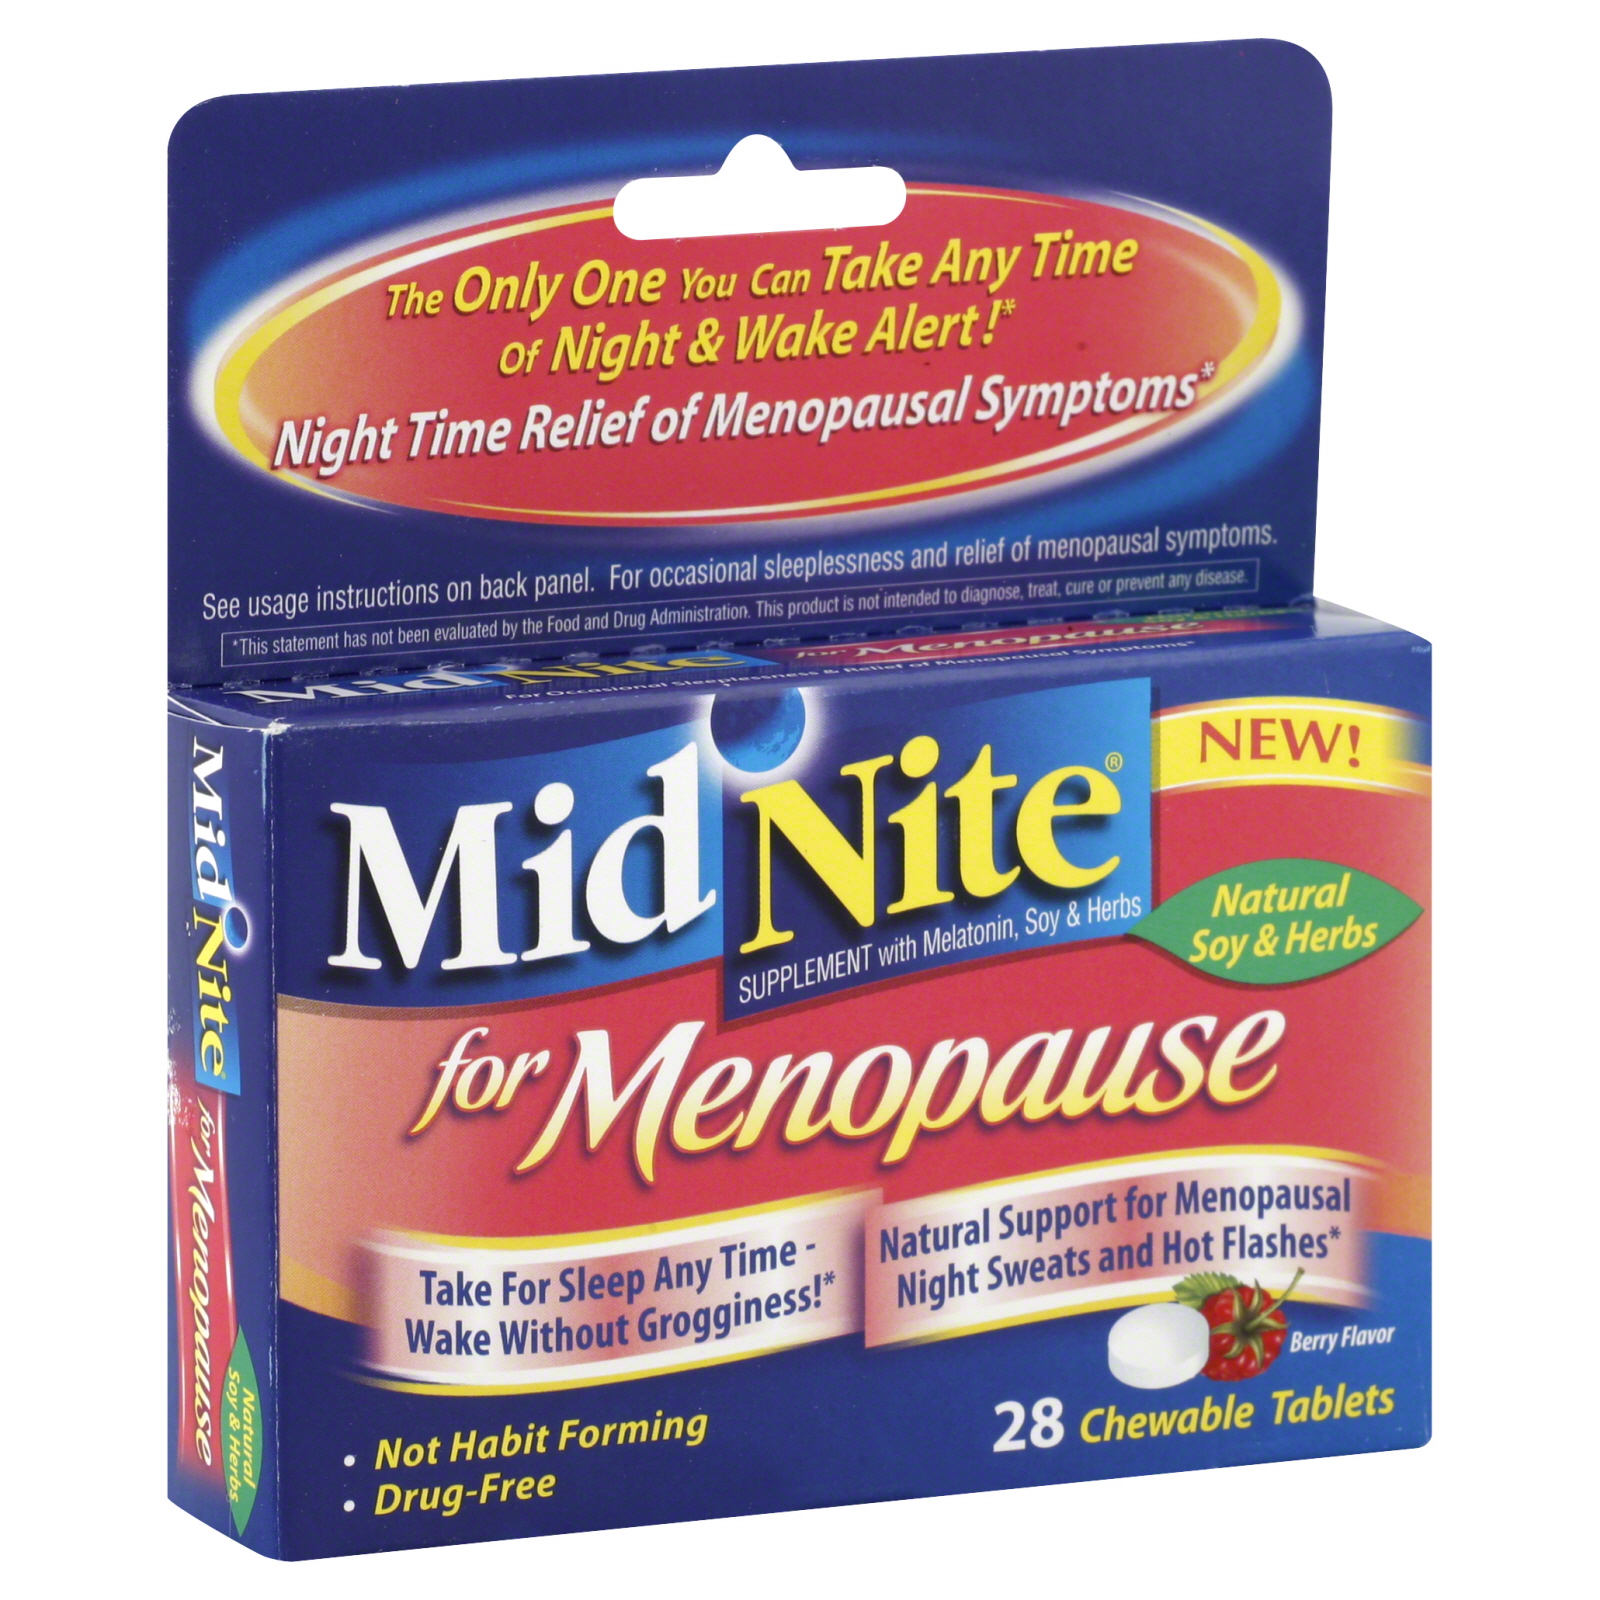 Waterbury Nighttime Sleep Aid, for Menopause, 28 Chewable Tablets, Berry Flavor